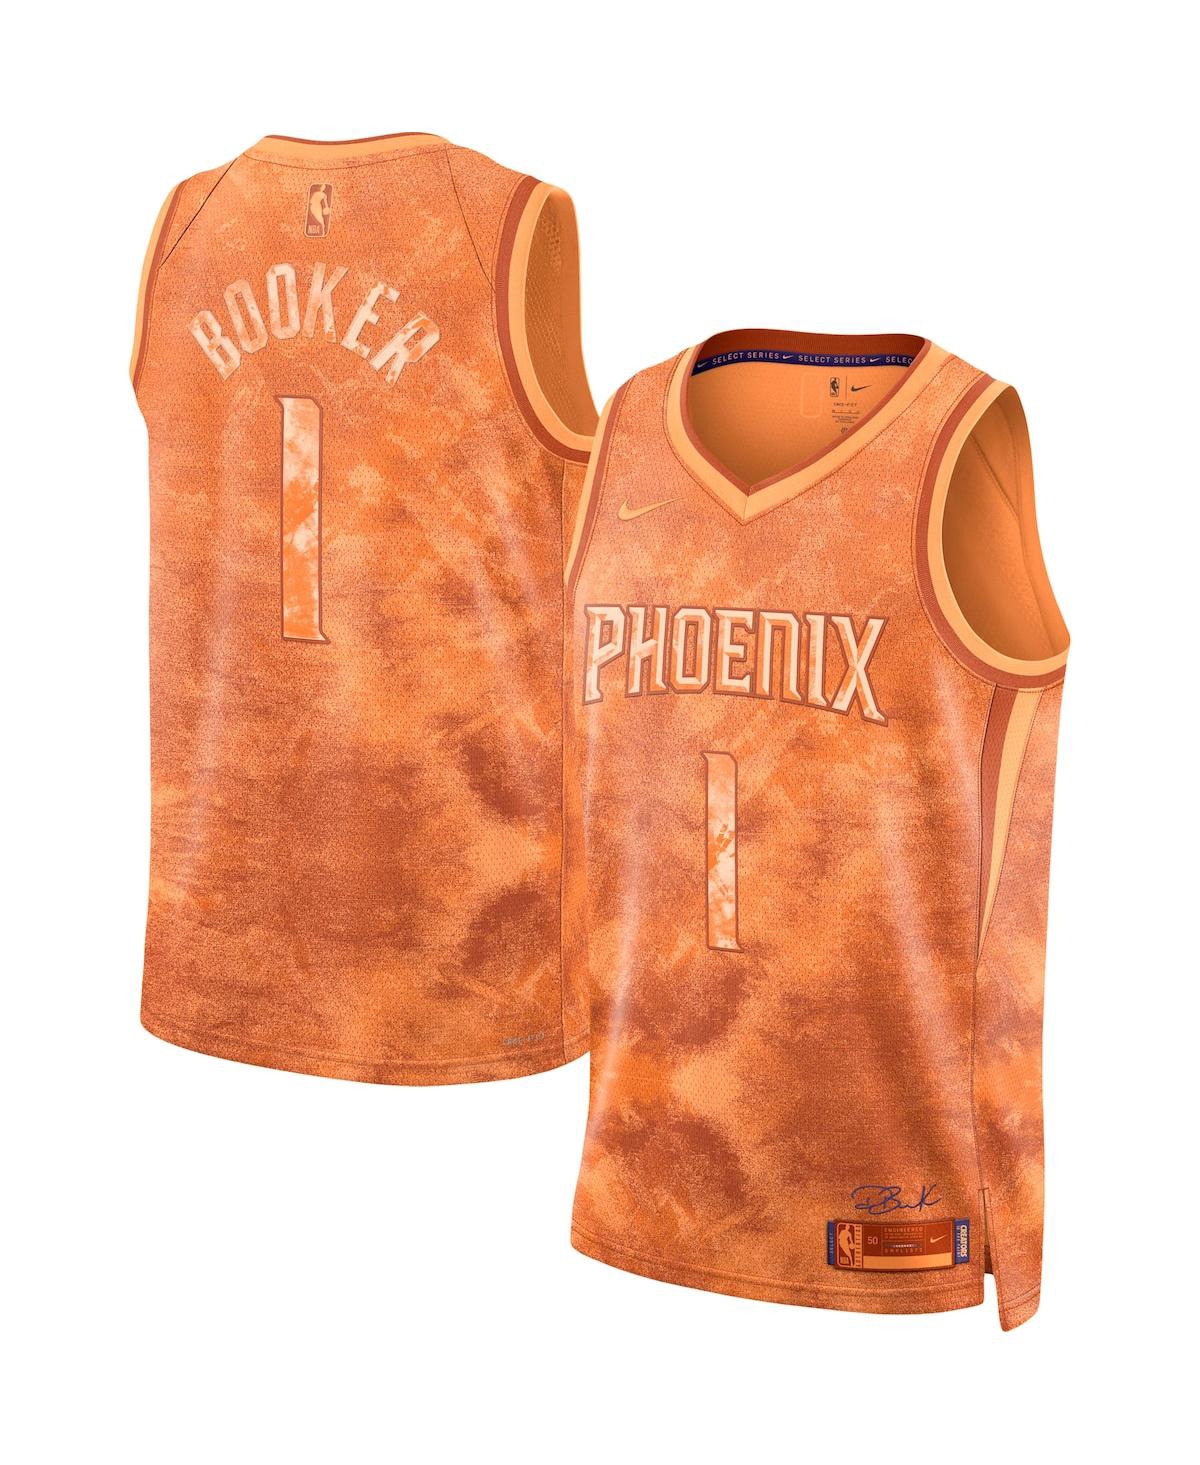 Men's Pro Standard Chris Paul Black Phoenix Suns Player Replica Shorts